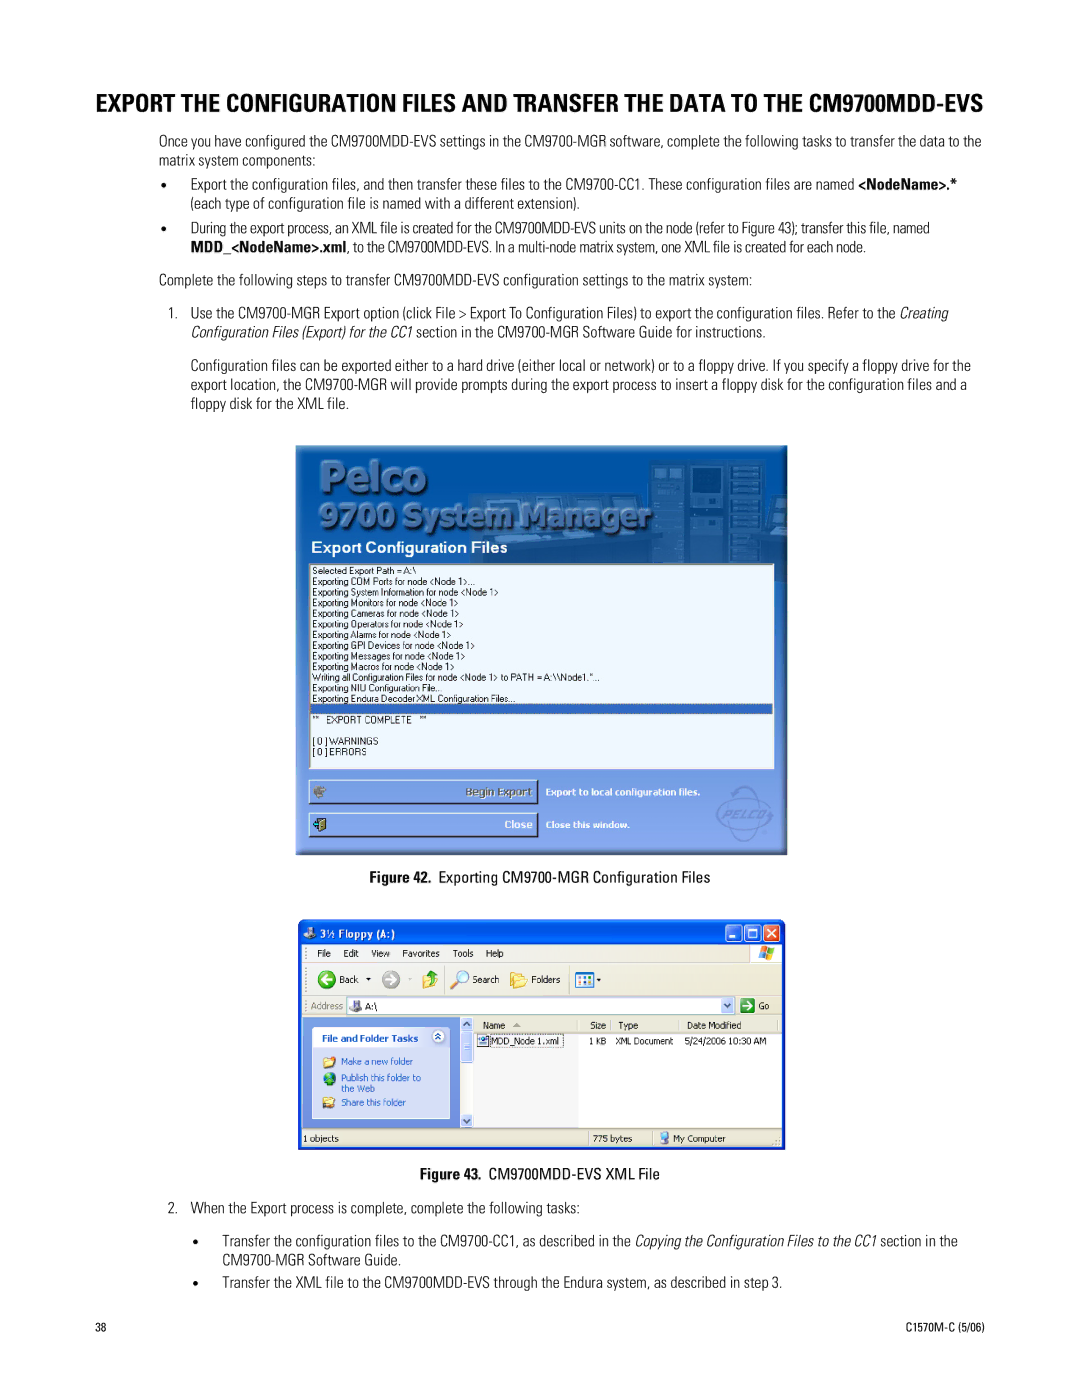 Pelco CM9700MDD-EVS manual Exporting CM9700-MGR Configuration Files 